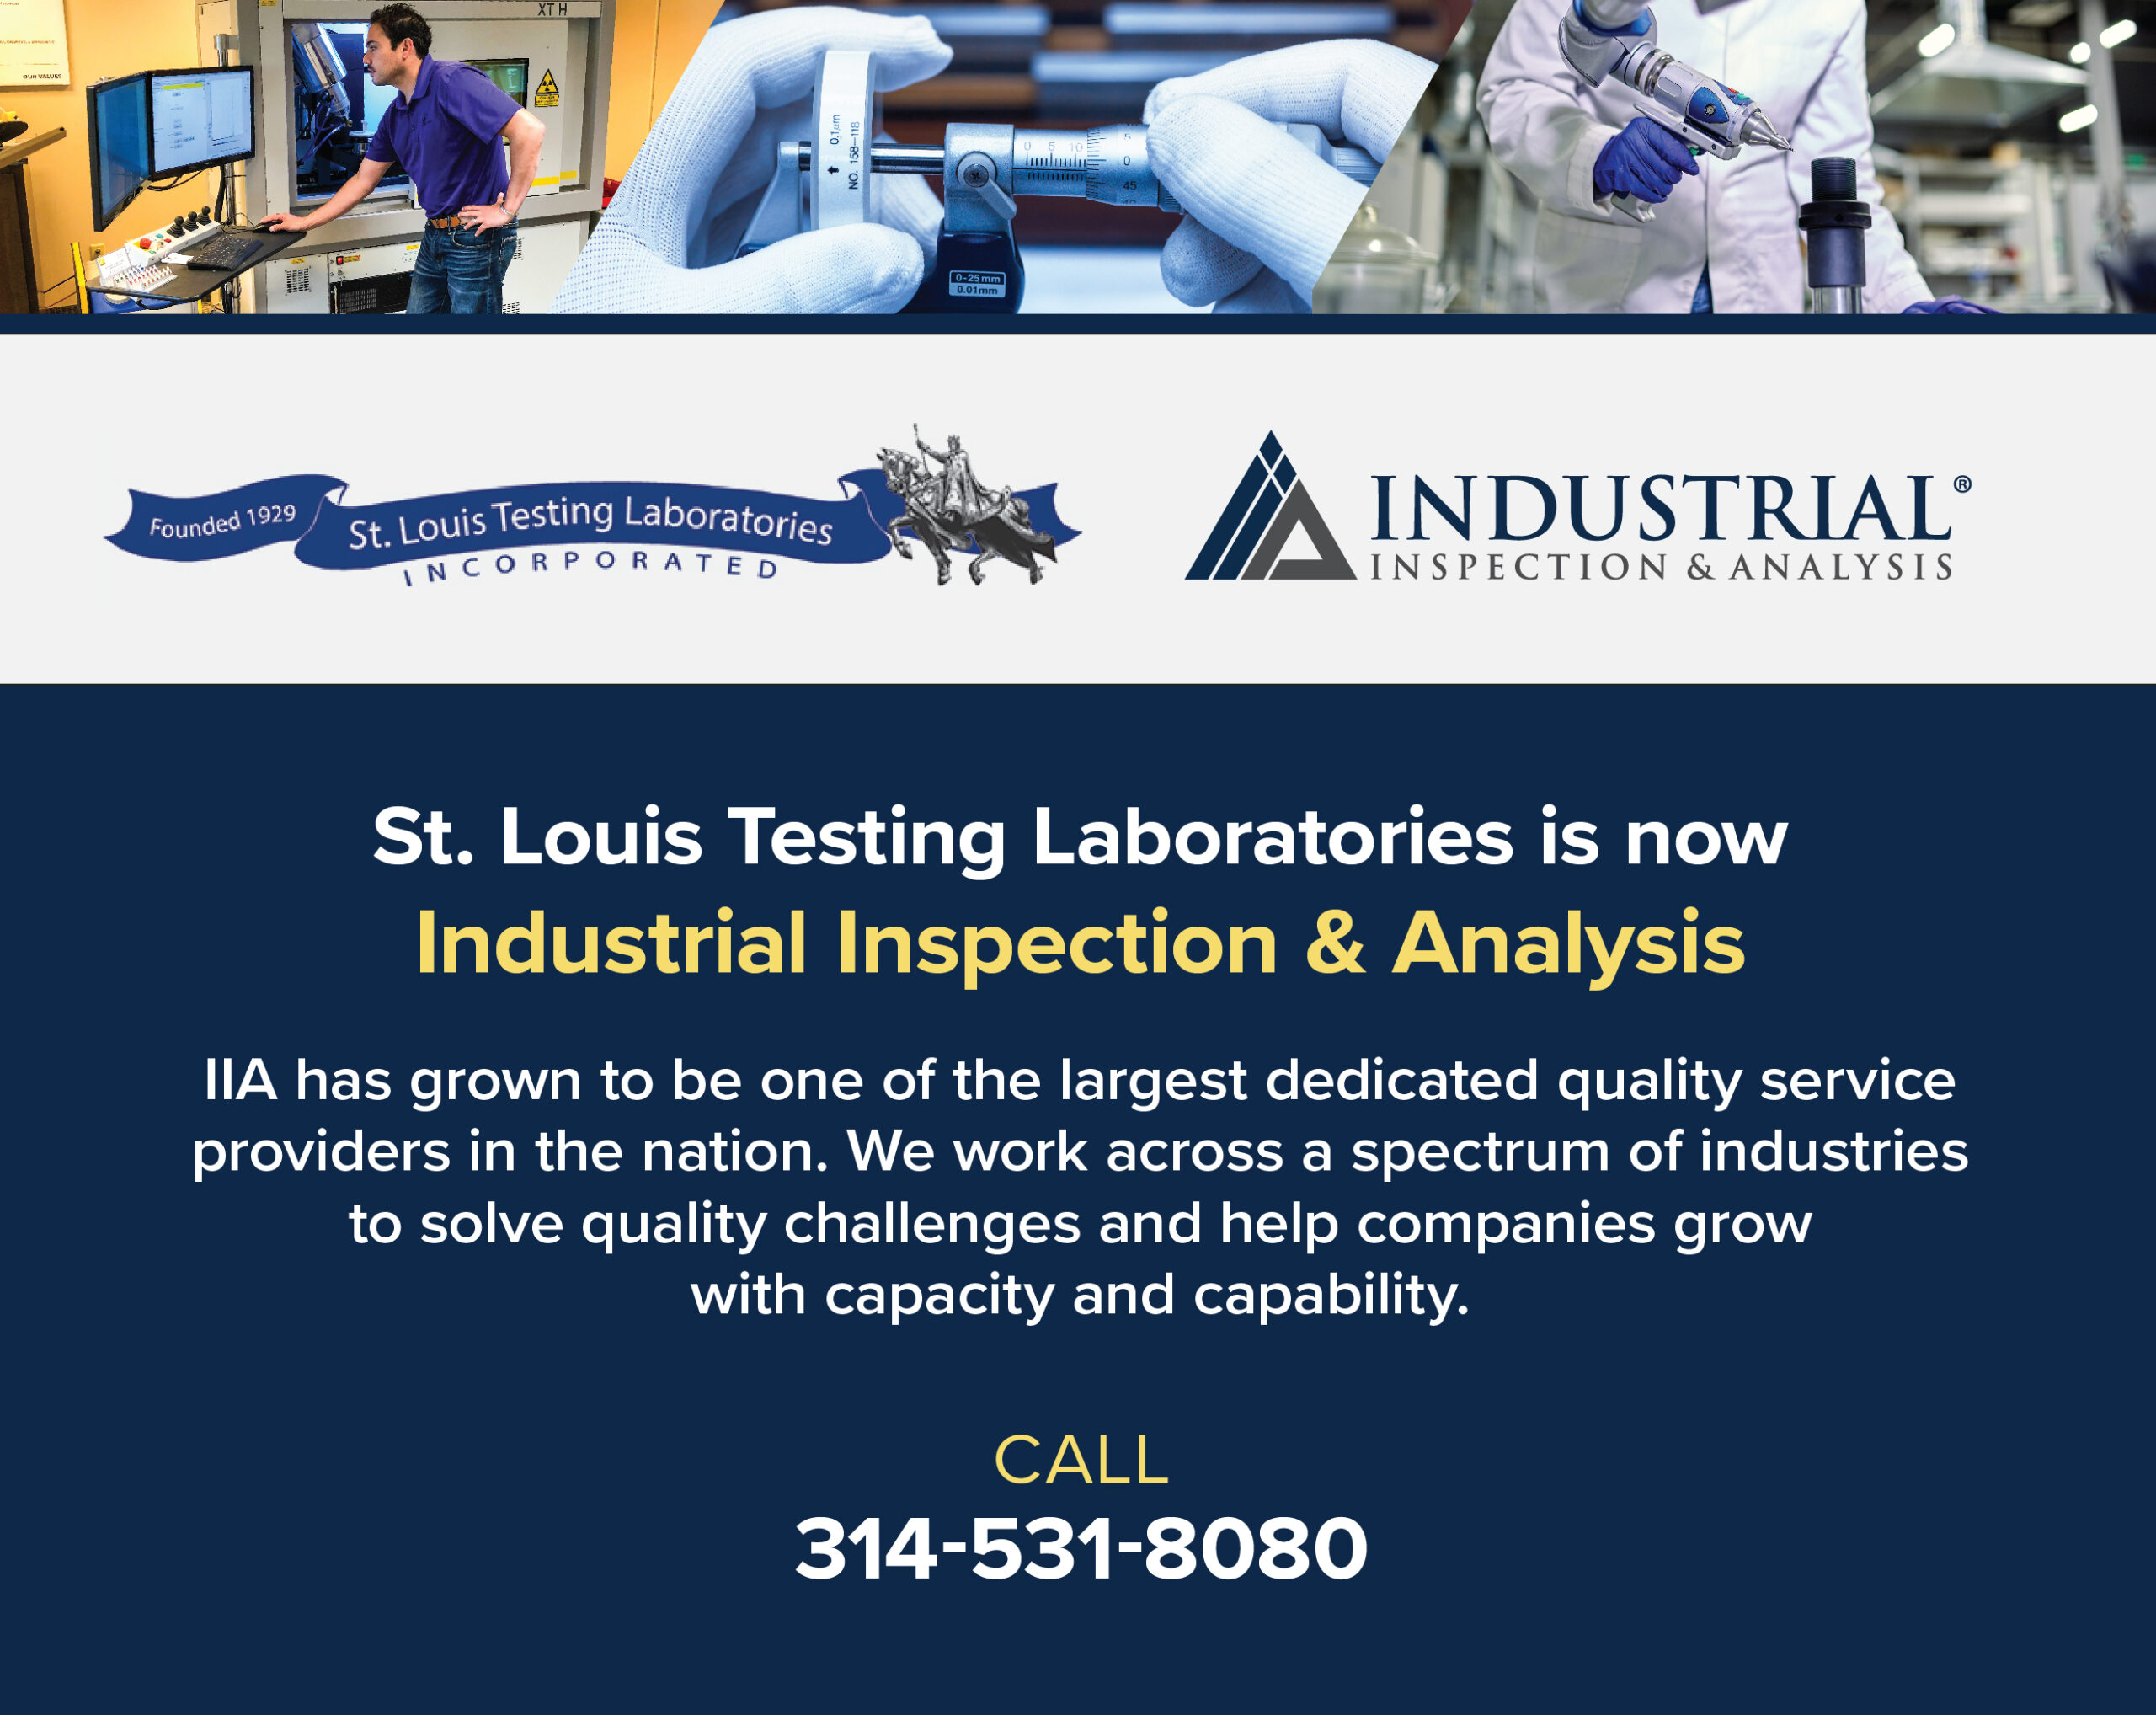 IIA Laboratory Services – STLTestLab